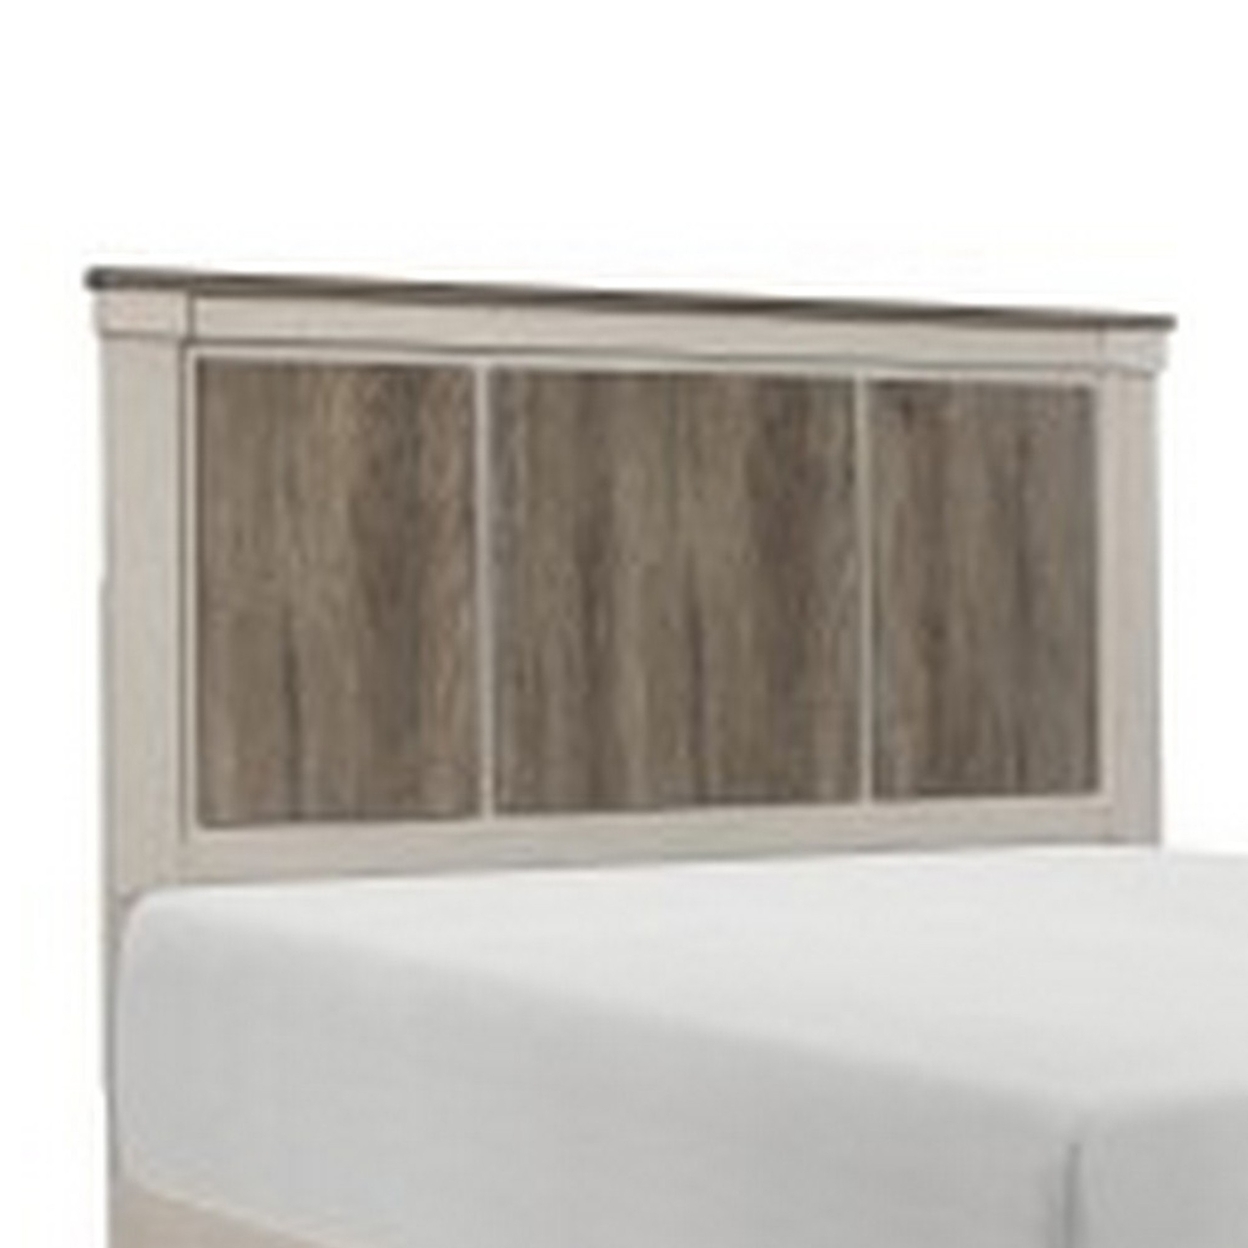 Caro Classic Queen Bed, Minimalist Design, Two Toned Weathered Gray, White- Saltoro Sherpi